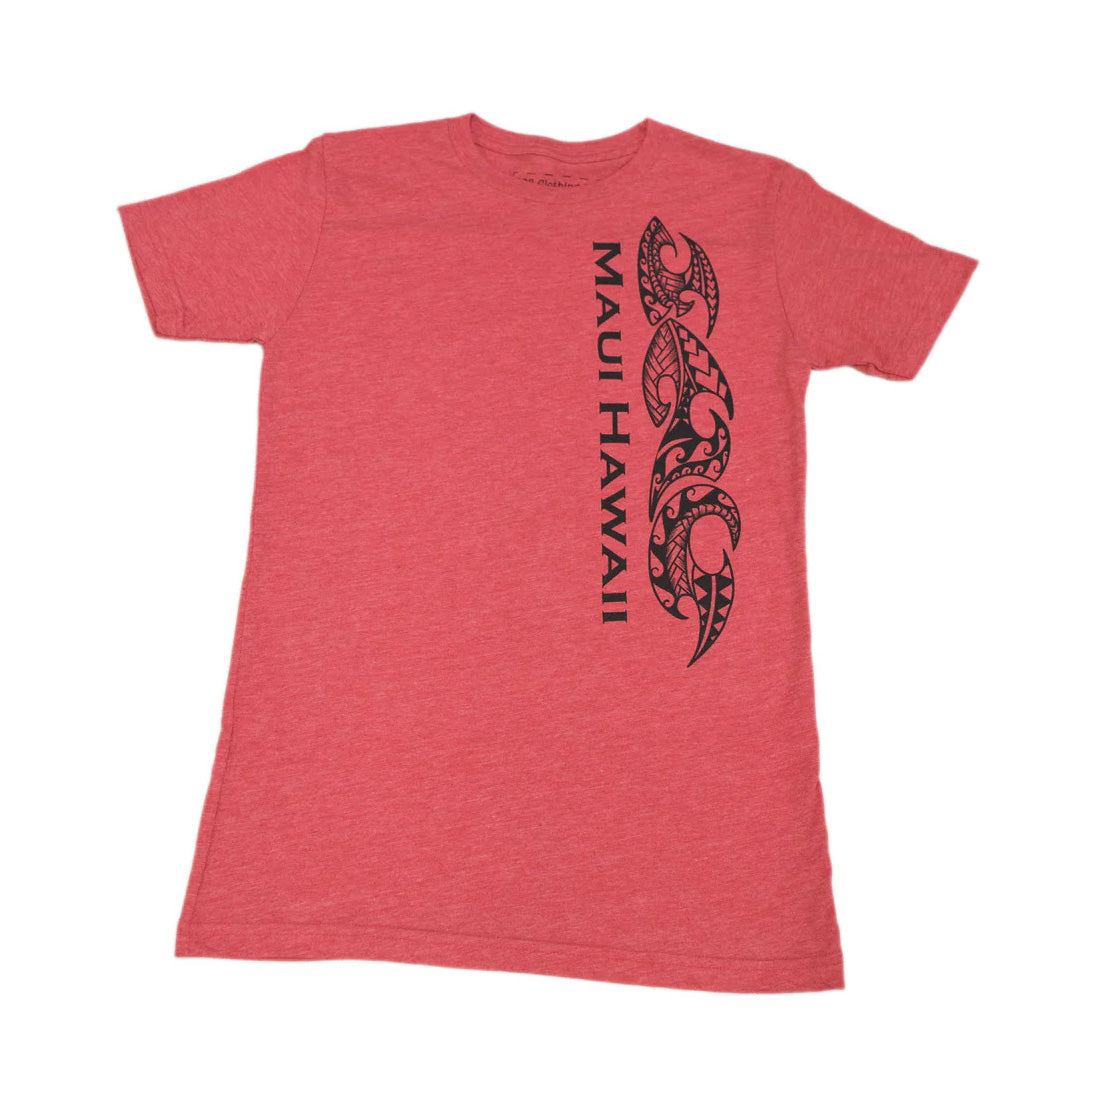 Pop-Up Mākeke - 808 Clothing - Hawaiian Tribal Band Men's Short Sleeve T-Shirt - Heather Red - Front View